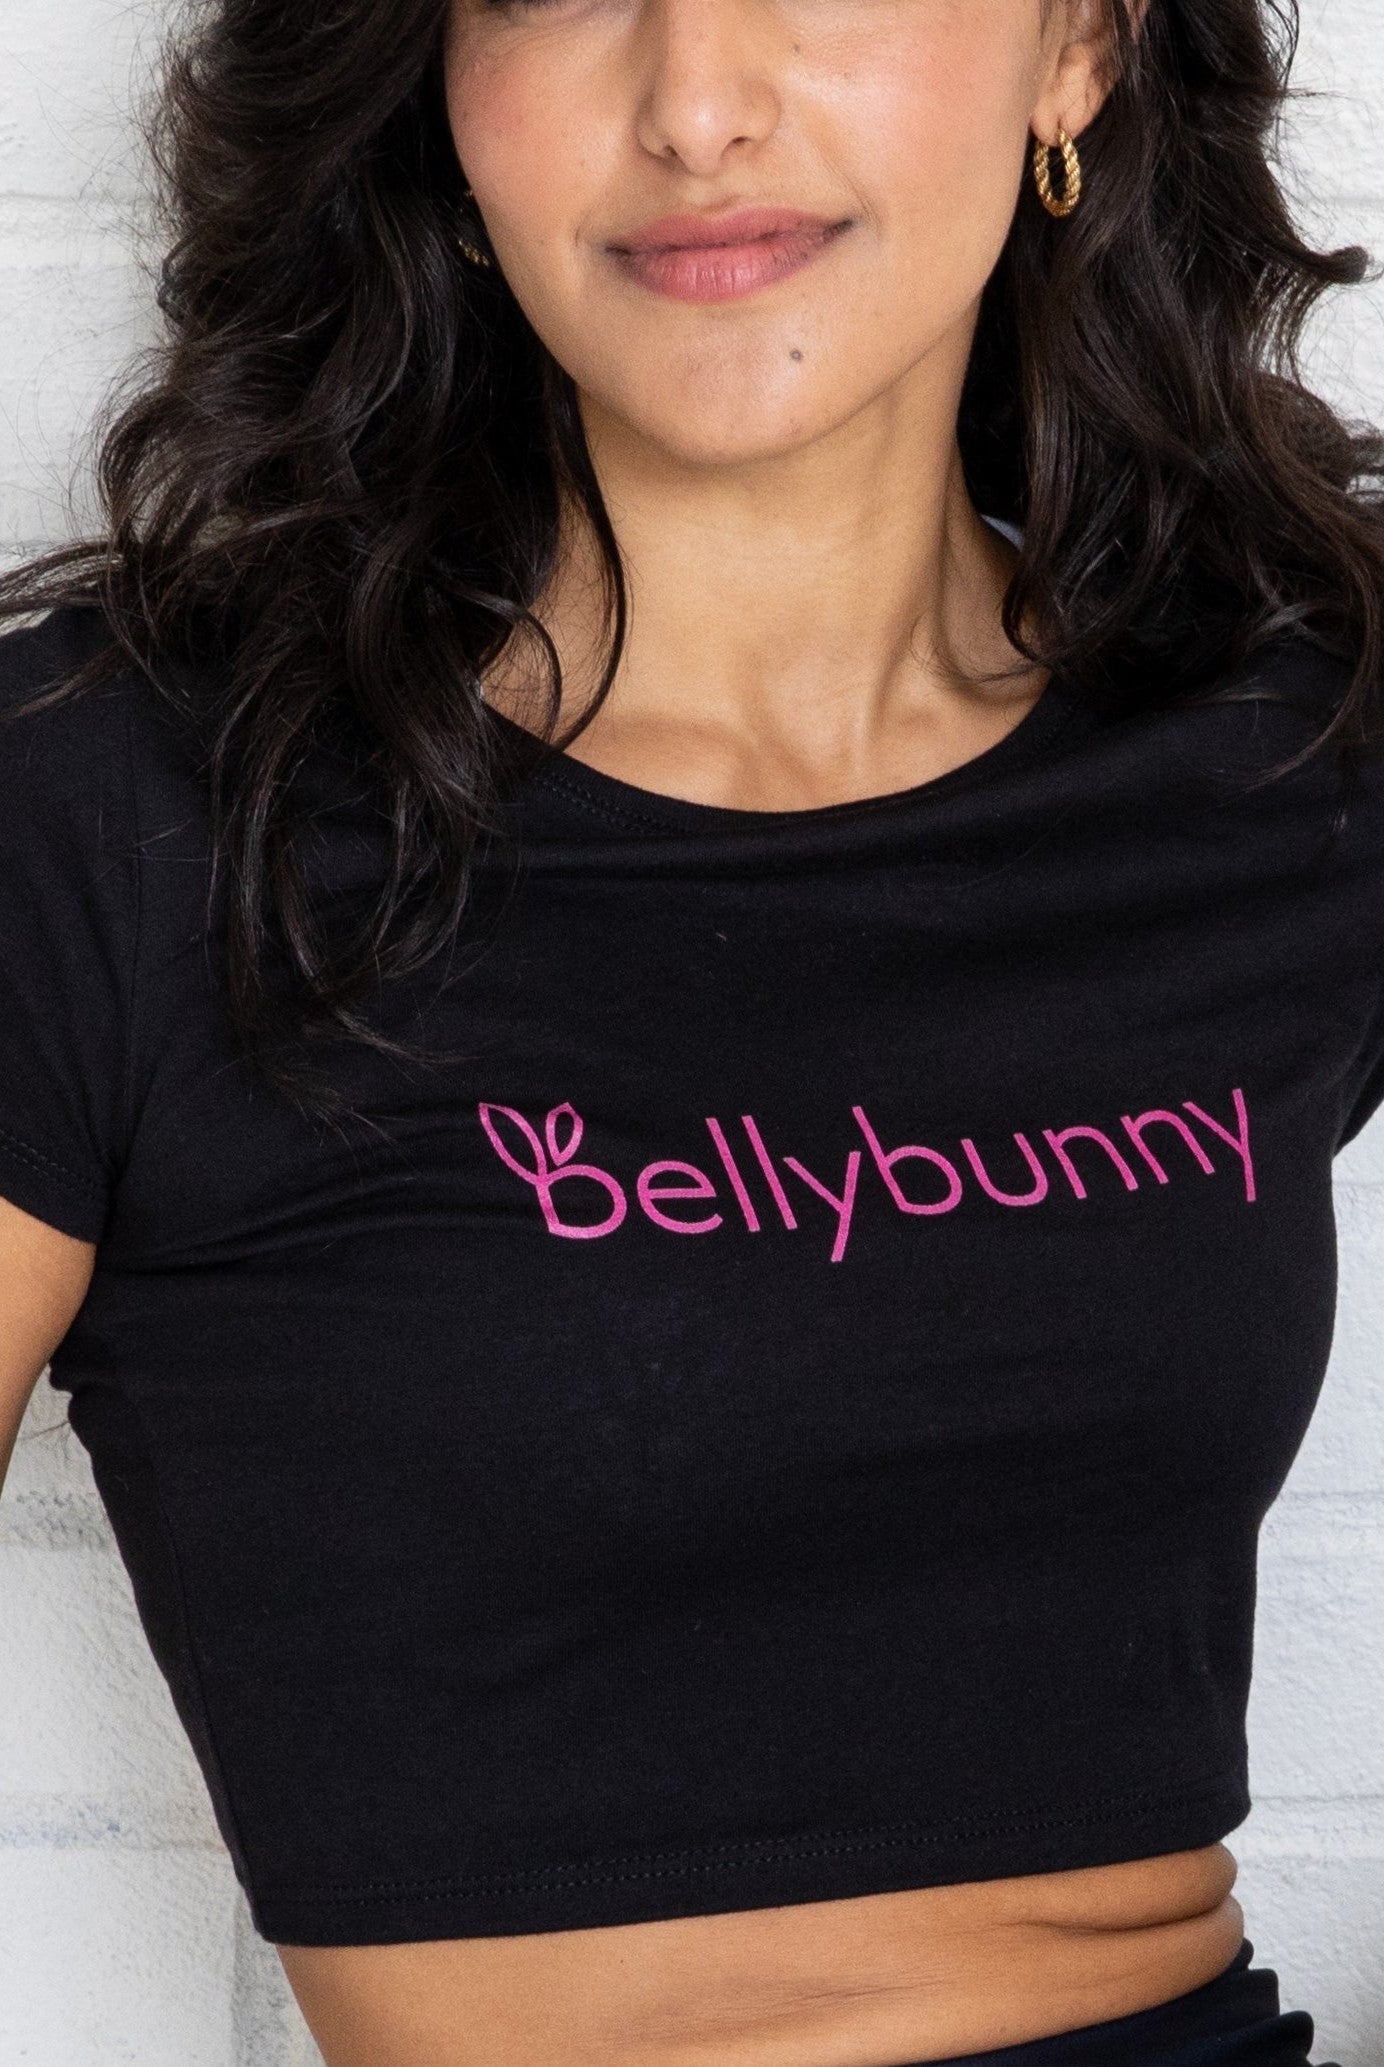 Bellybunny-Women’s Crop Top-Black with pink logo